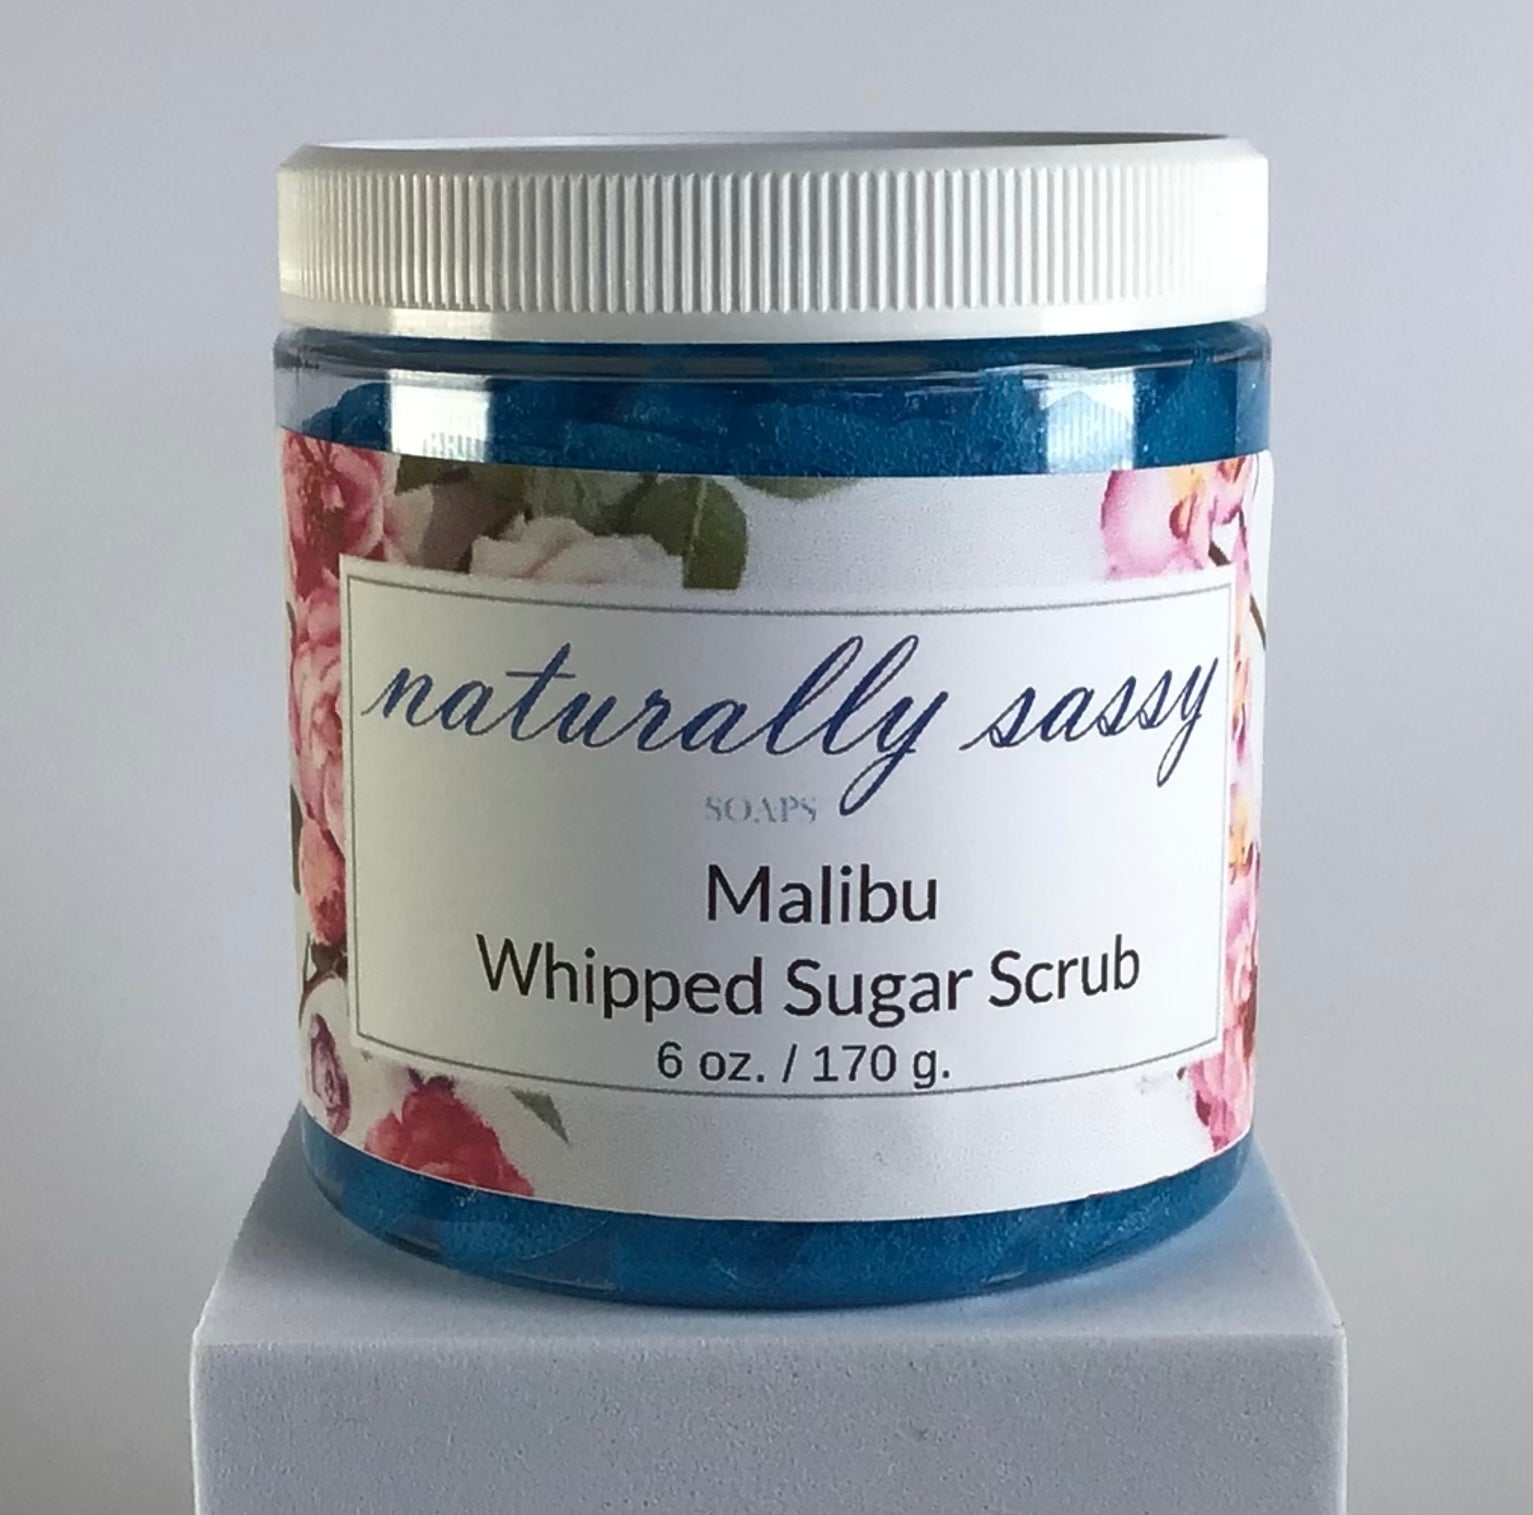 Malibu Whipped Sugar Scrub